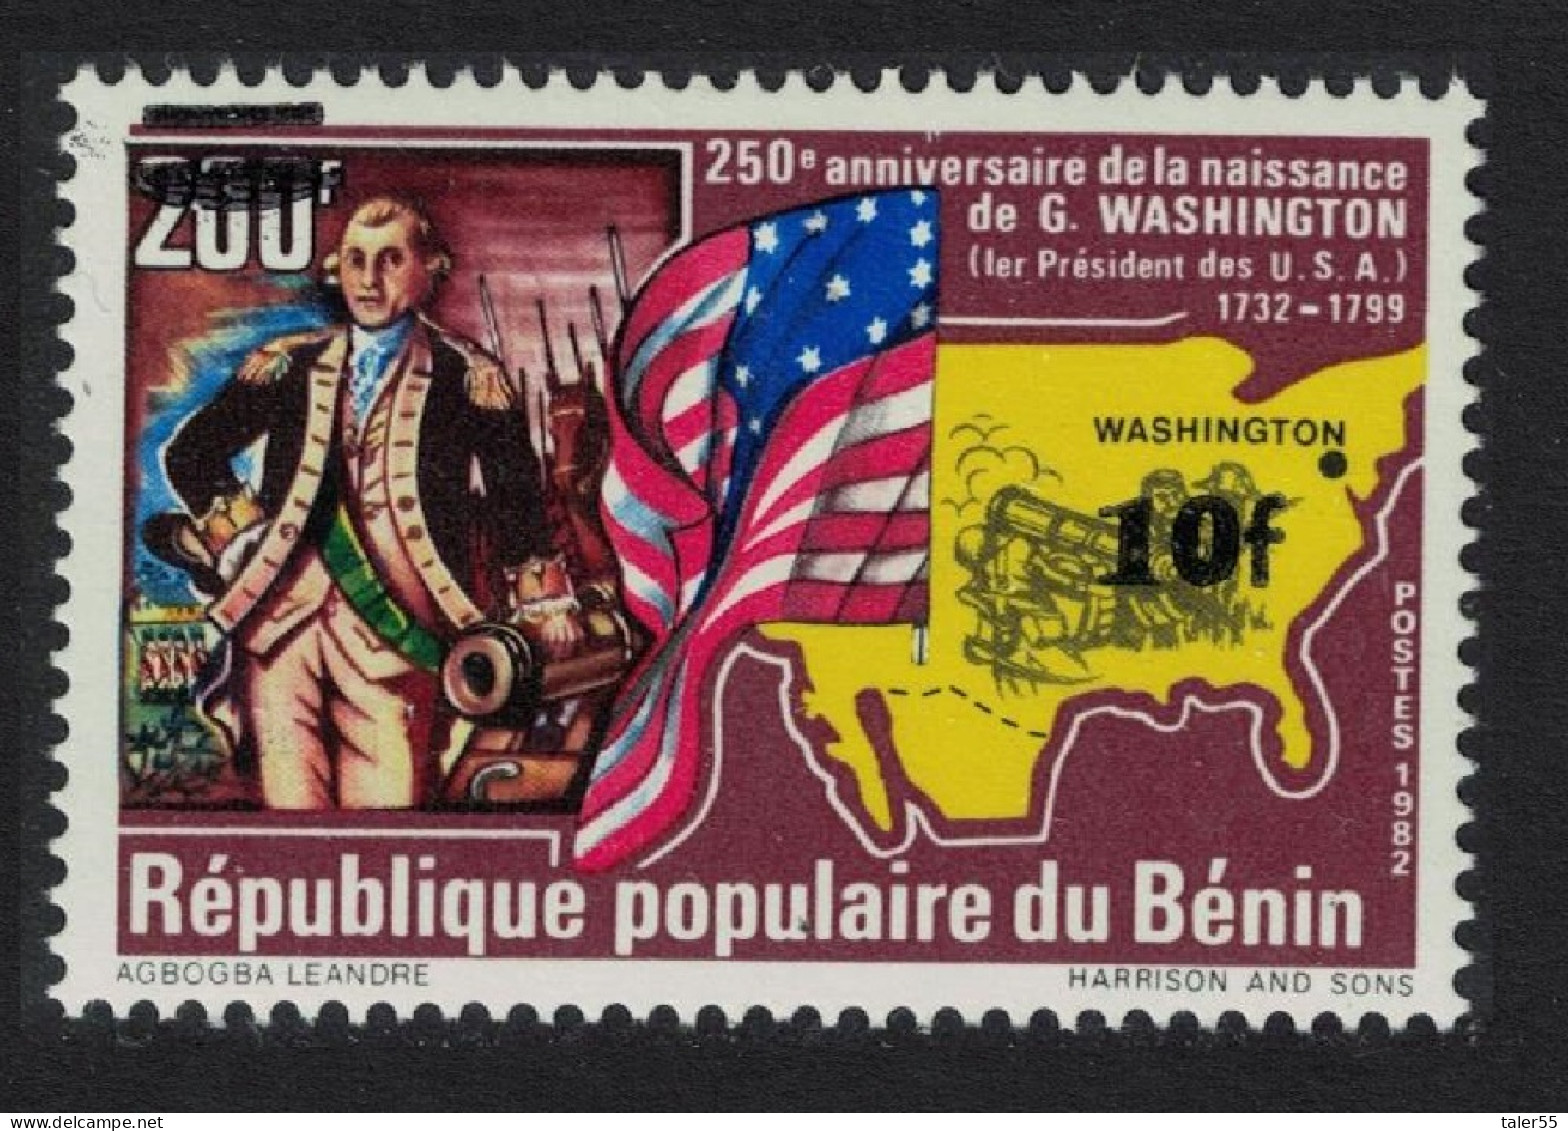 Benin George Washington Ovpt 1984 MNH SG#924 MI#359 - Benin – Dahomey (1960-...)